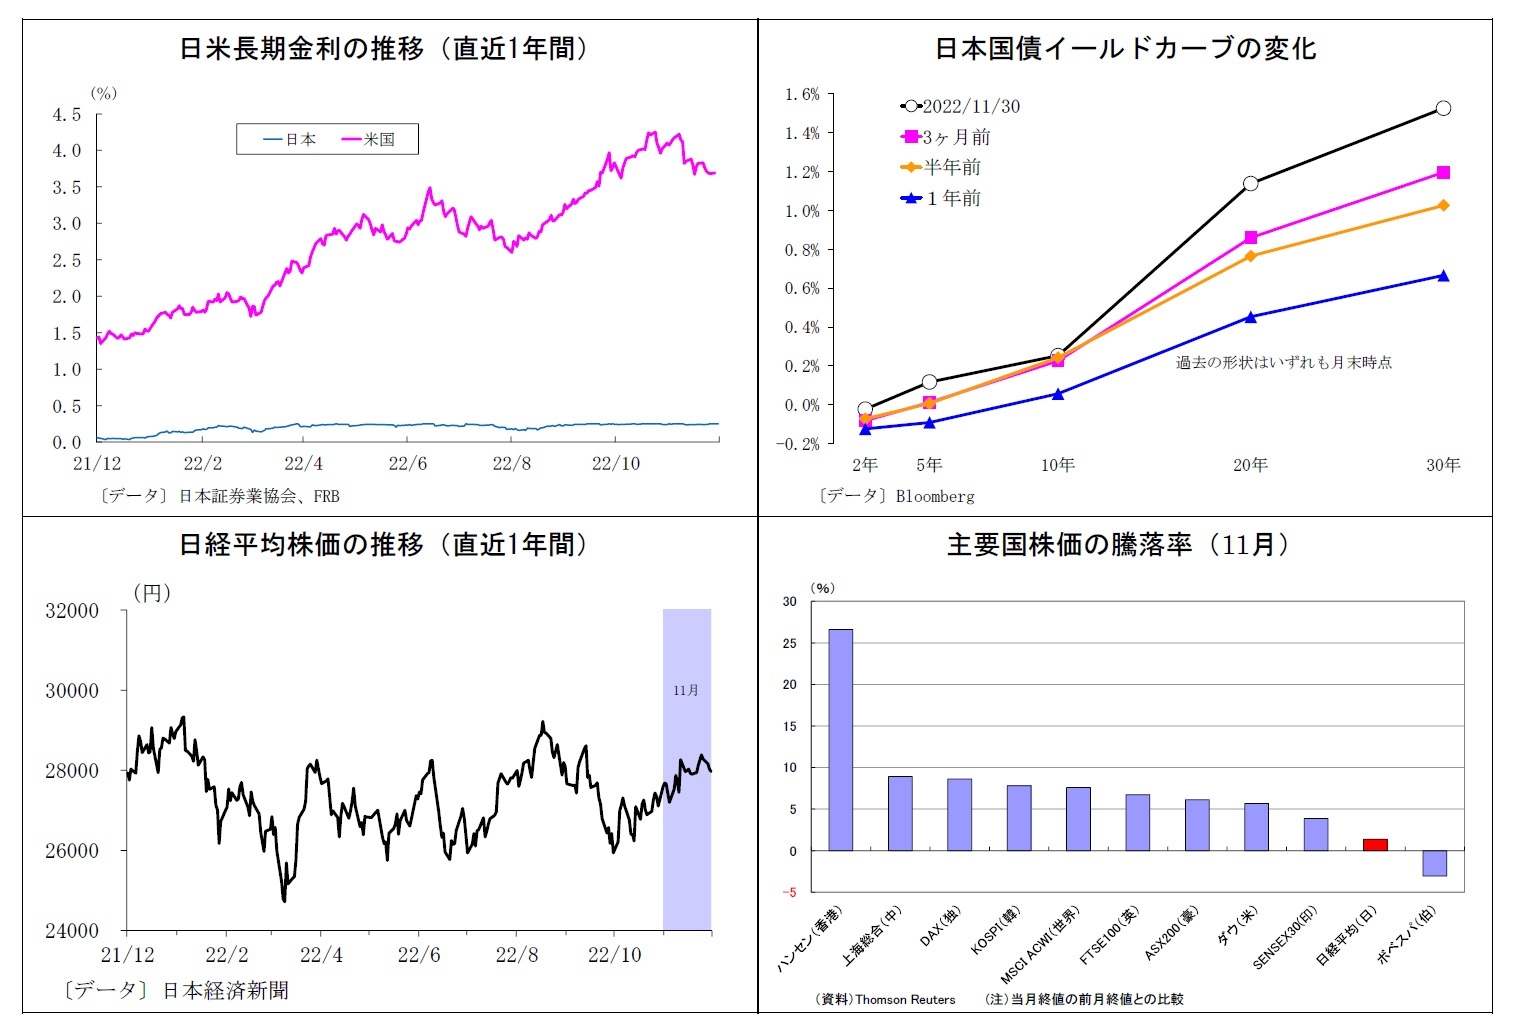 日米長期金利の推移（直近1年間）/日本国債イールドカーブの変化/日経平均株価の推移（直近1年間）/主要国株価の騰落率（11月）